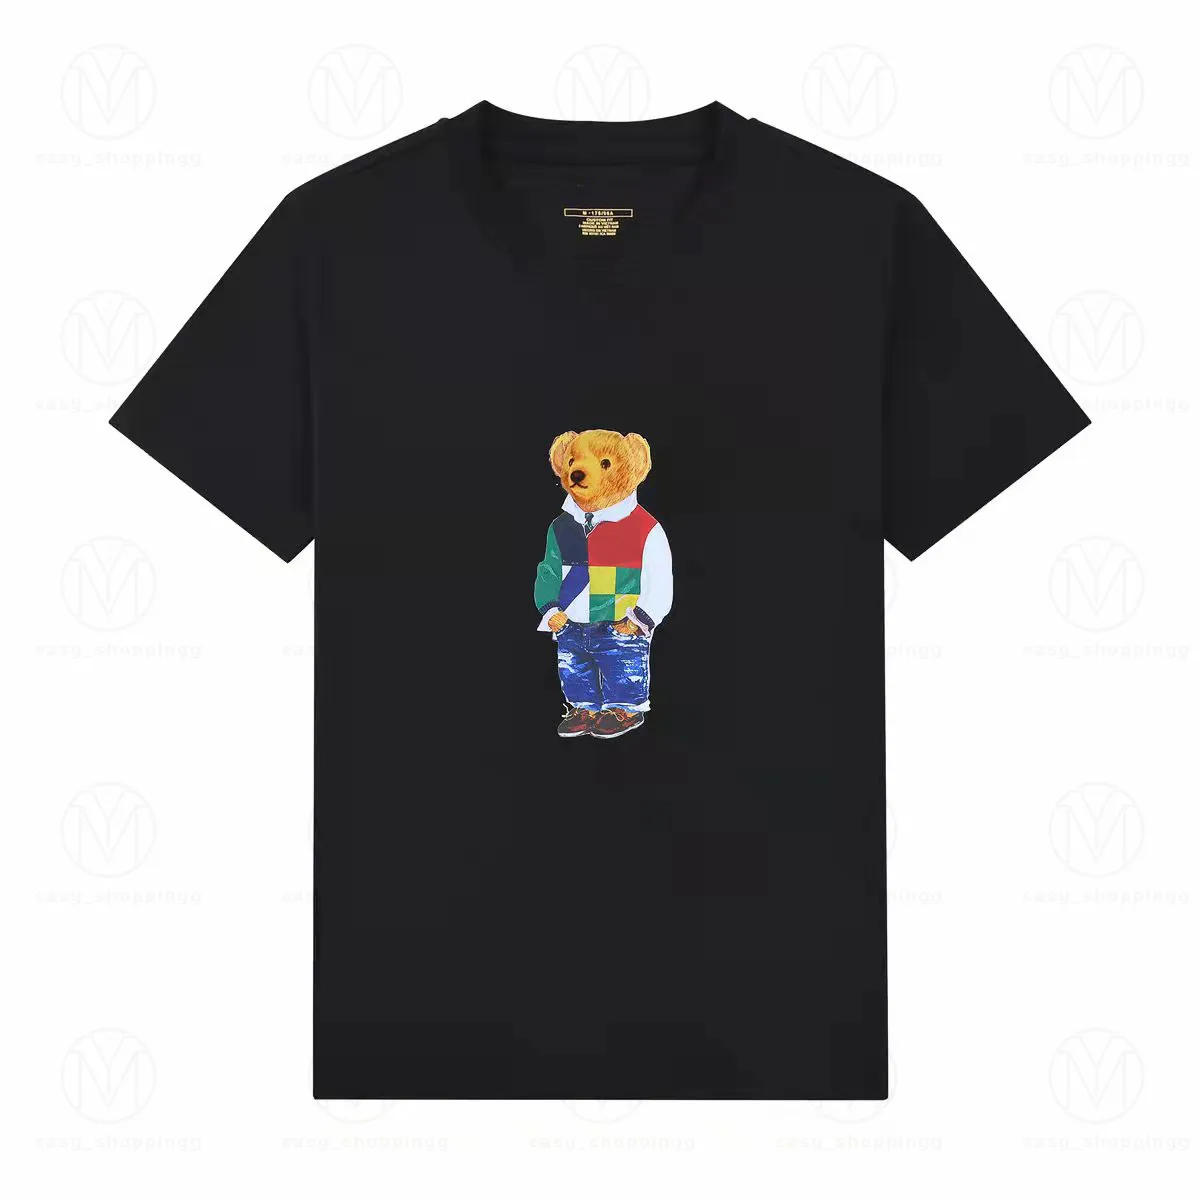 Polo Tshirts Designers Fashion Bear T Shirts Polos Mens Women T-shirts Tees Tops Man S Casual Chest Letter Shirt Klädhylsa S Tyg 8464